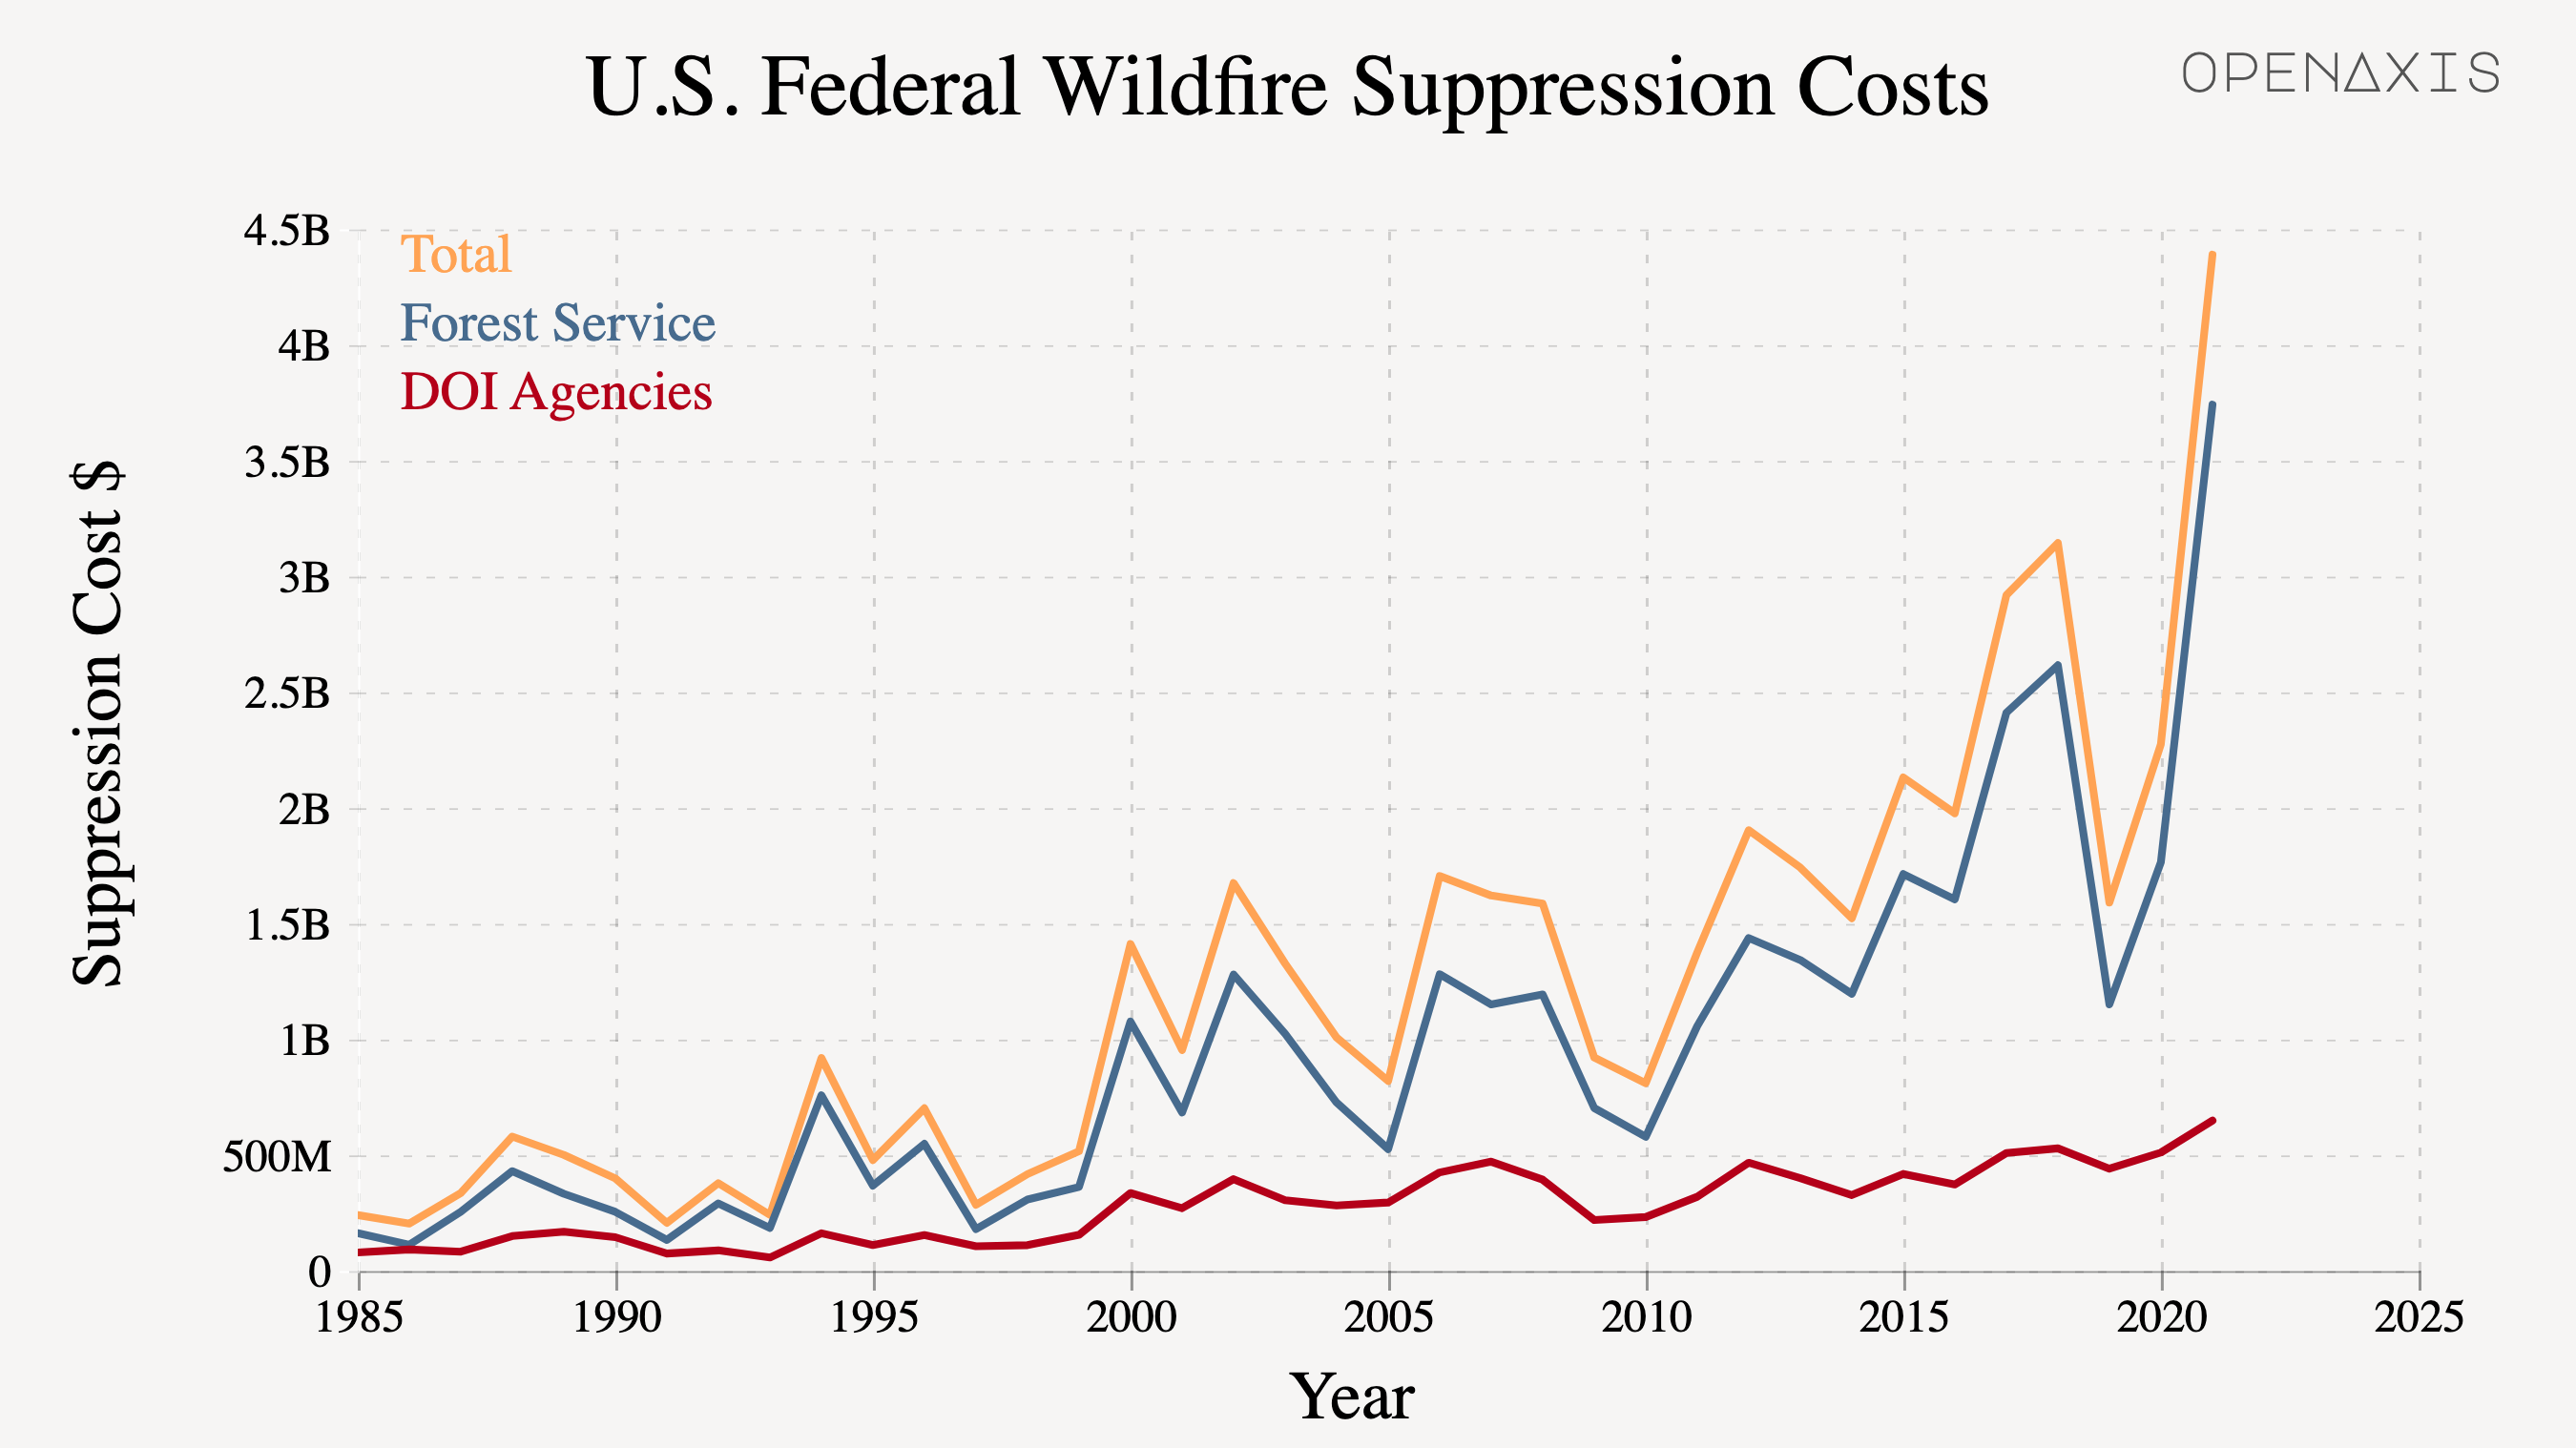 "U.S. Federal Wildfire Suppression Costs"